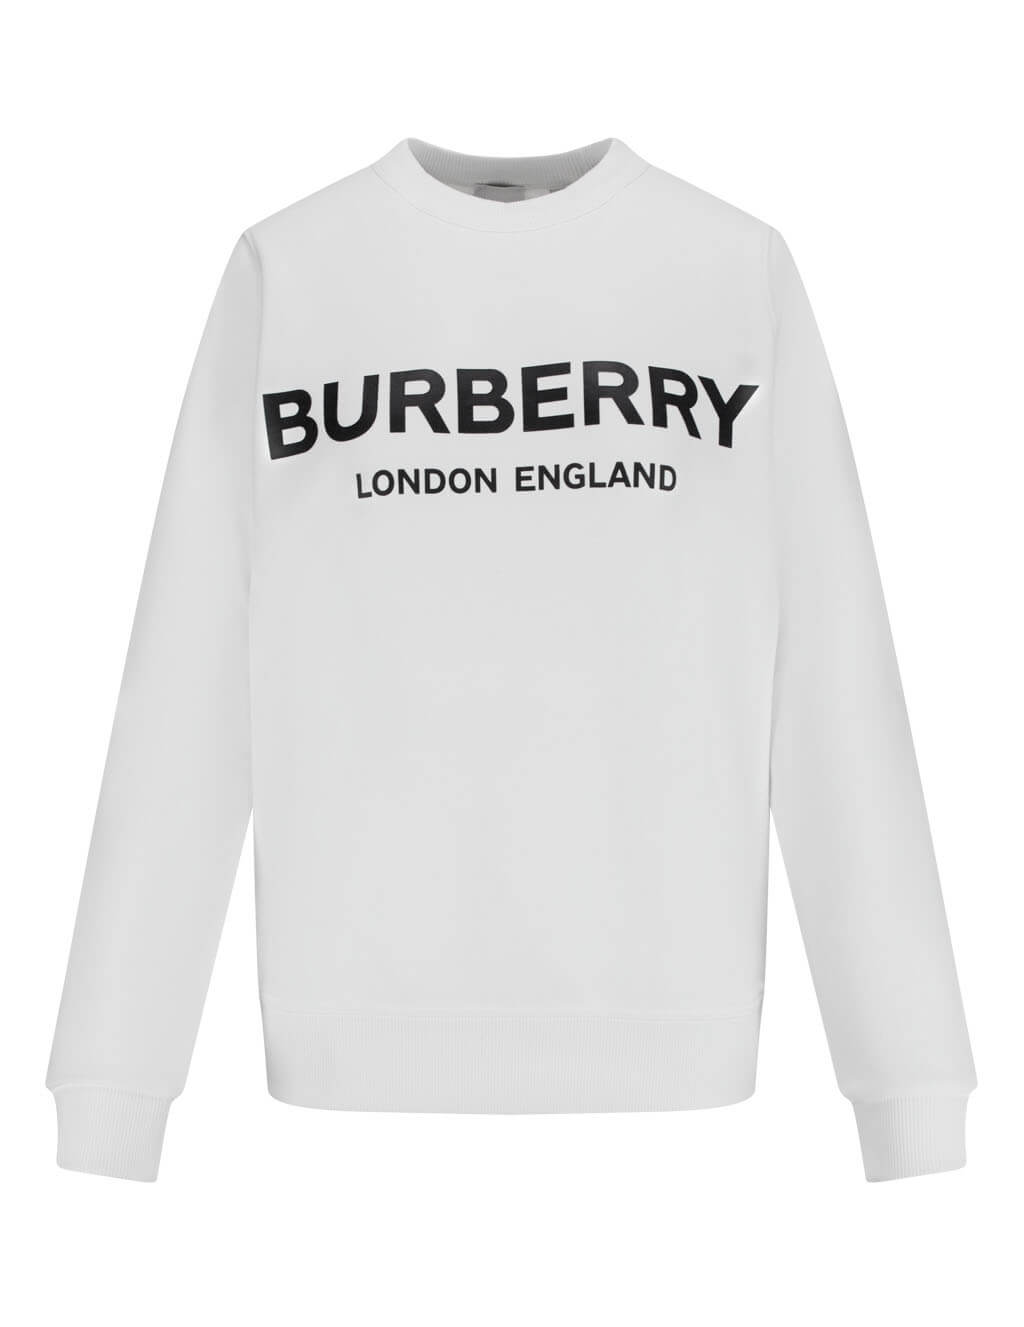 burberry sweater womens